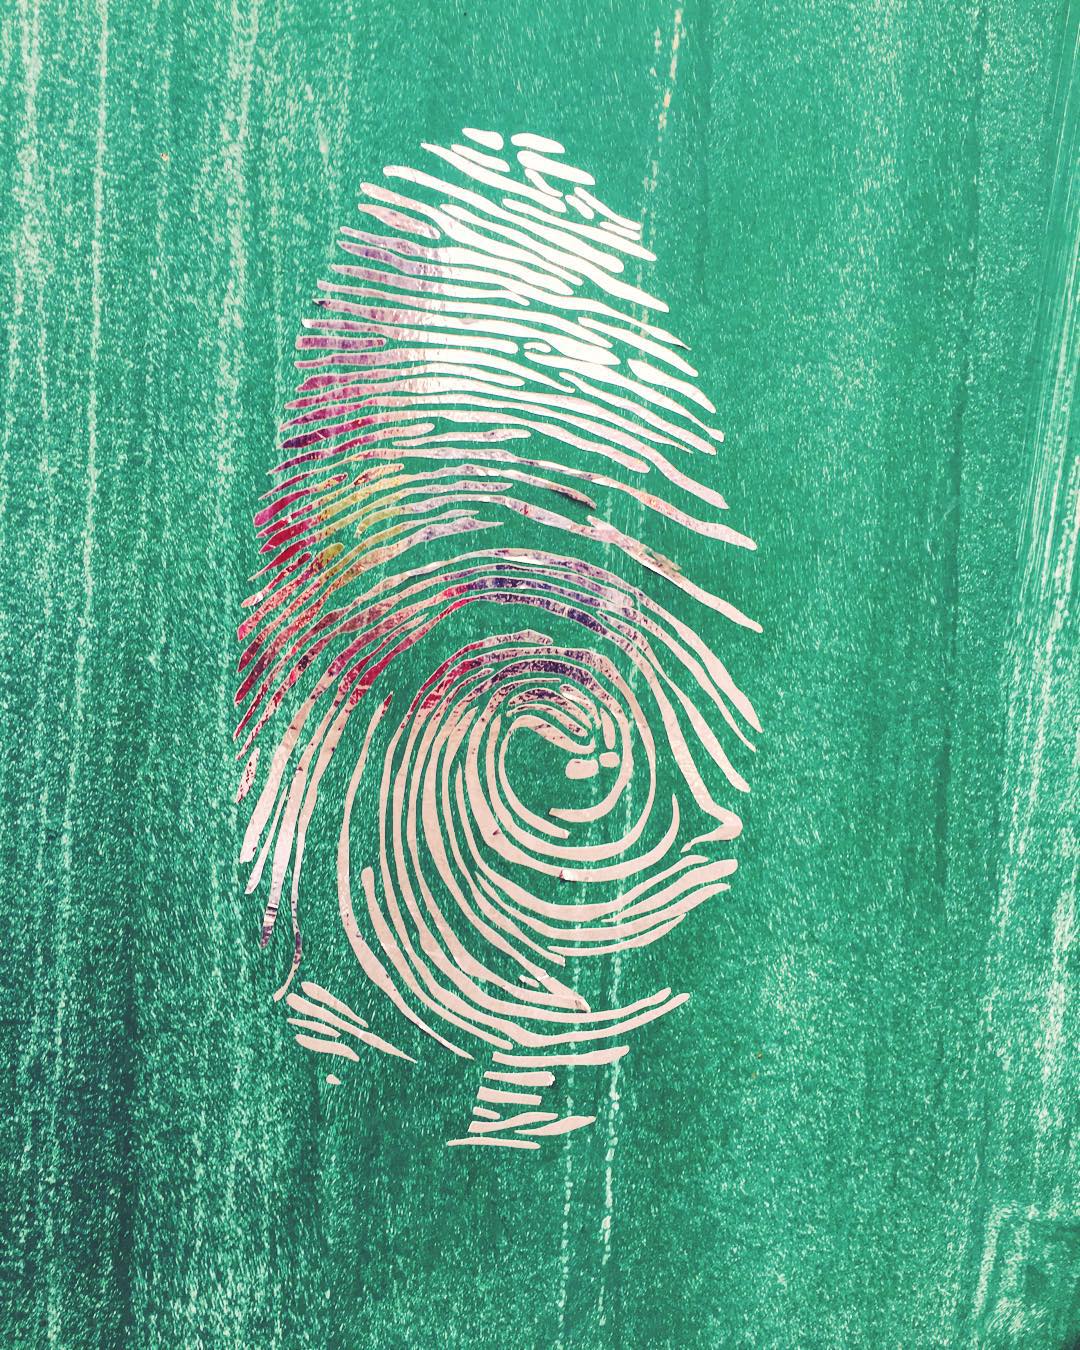 thumbsup-dude-silver-flashtattoo-style-graffiti--green-wall-quite-festive-such-shiny-much-print-fingerprint-363365_24008325811_o.jpg